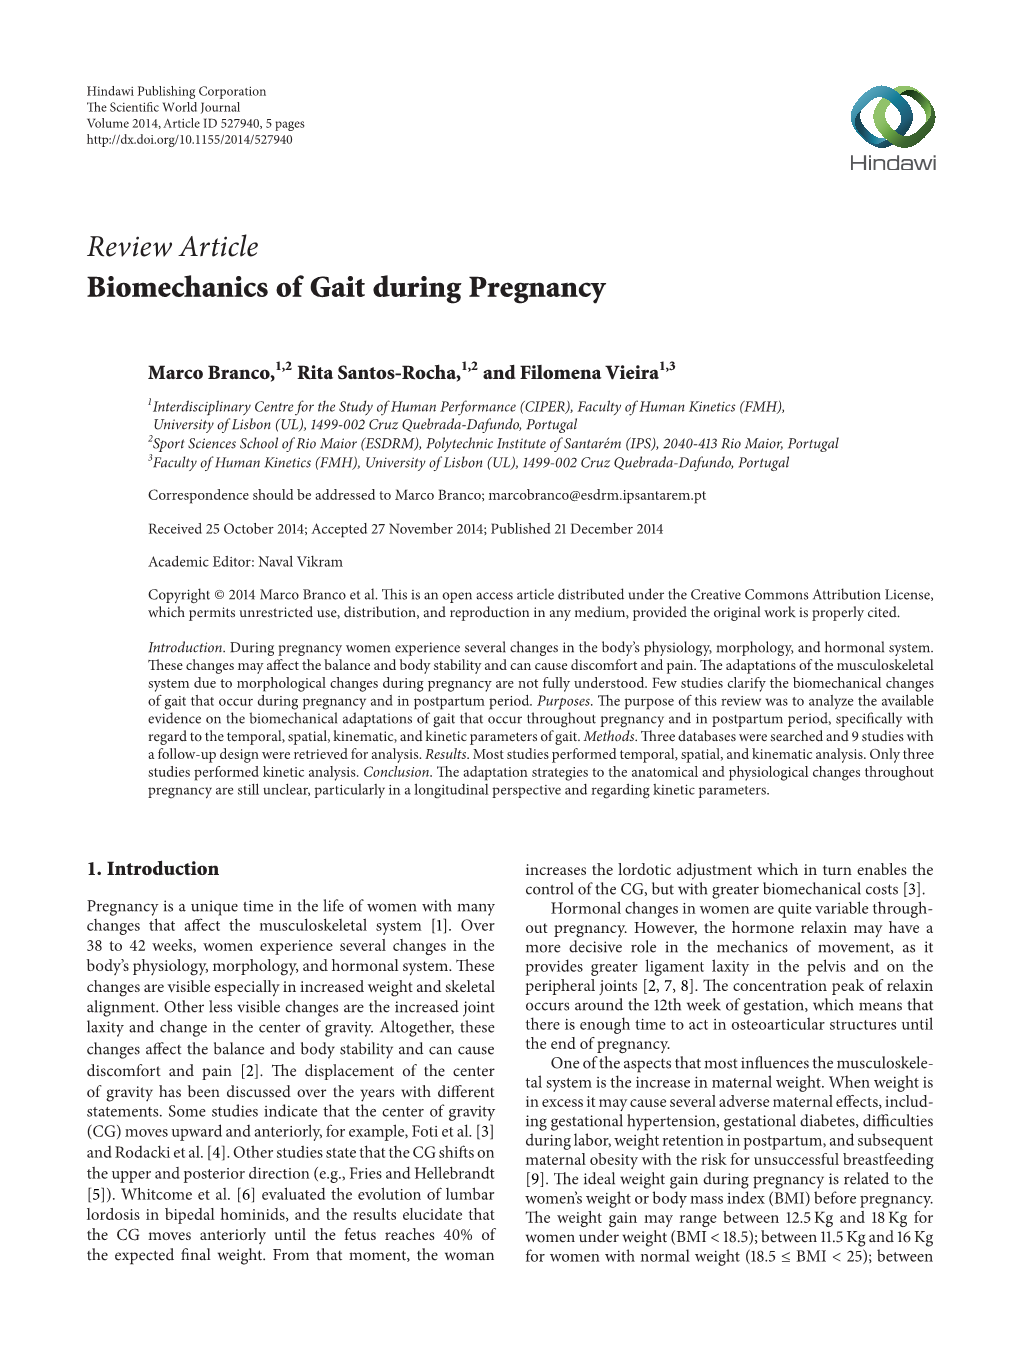 Biomechanics of Gait During Pregnancy